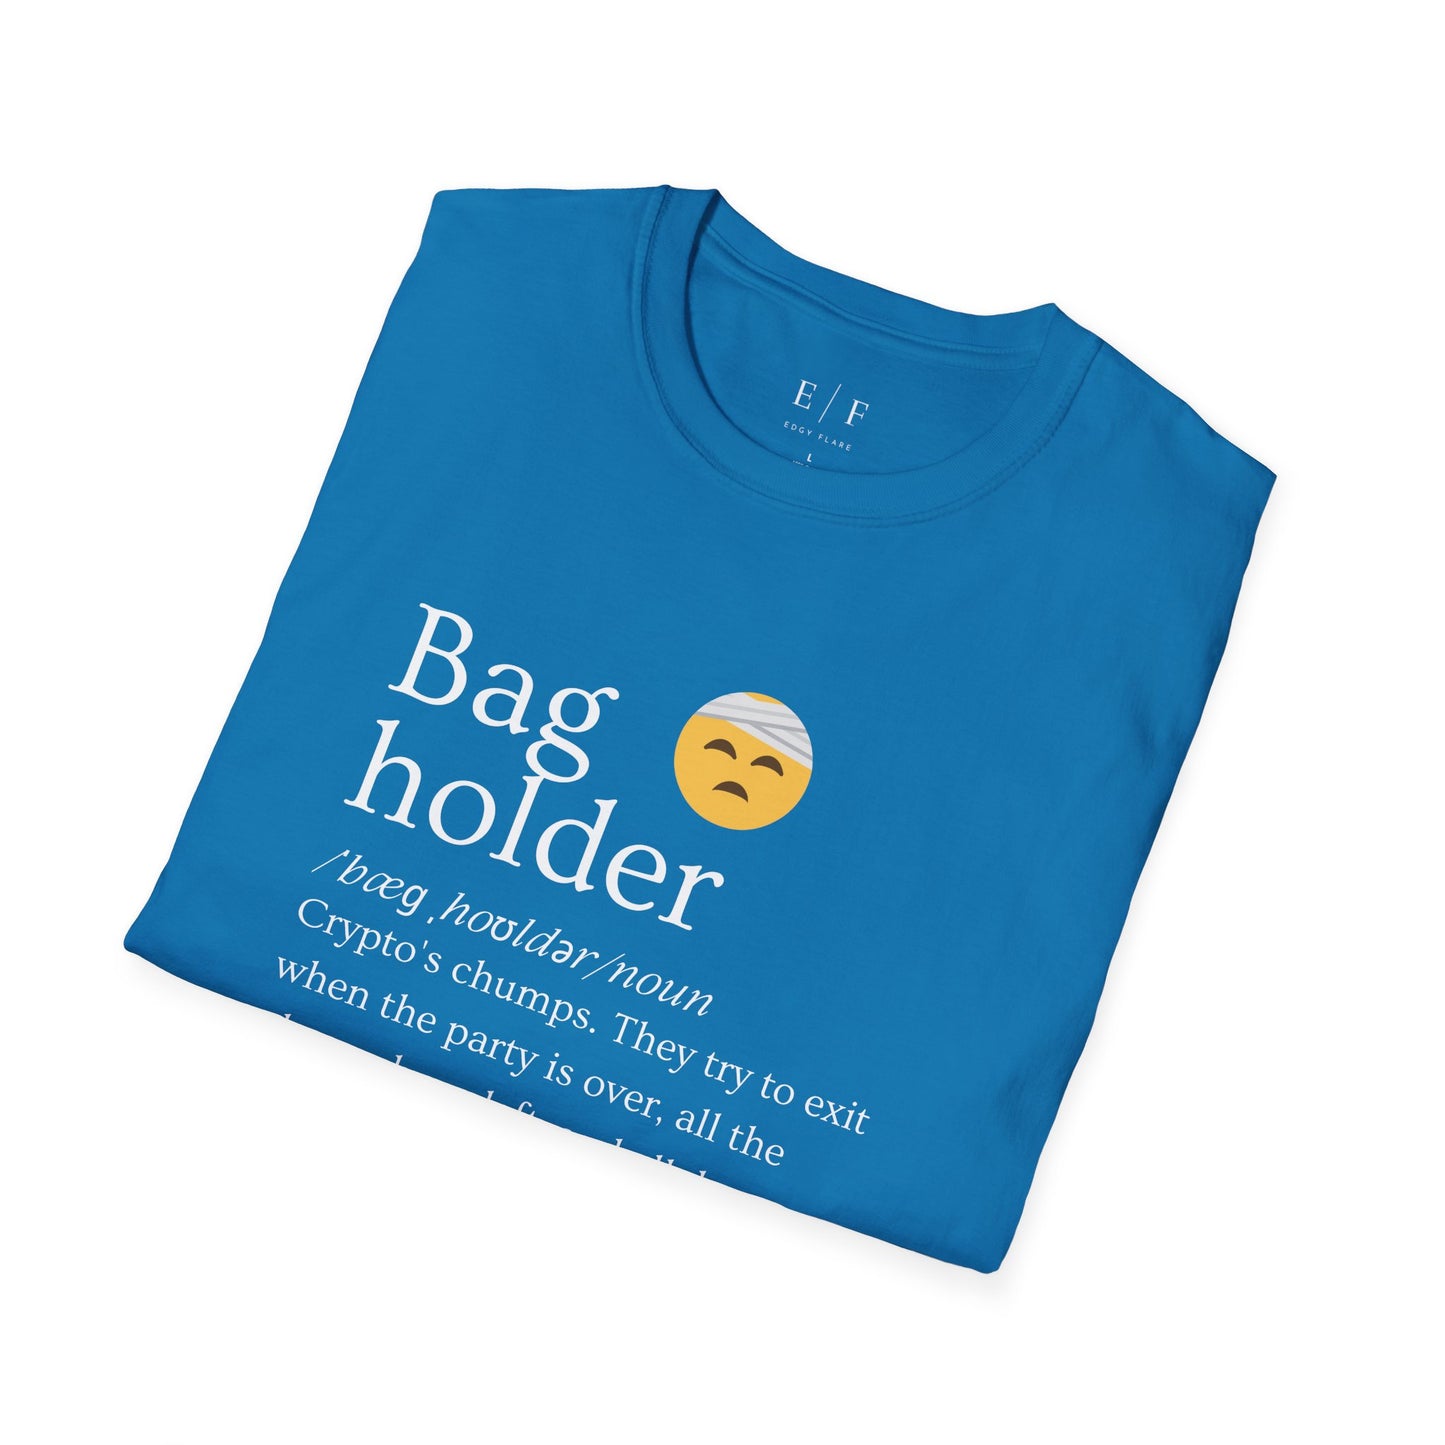 Bag holder Crypto Definition T-Shirt